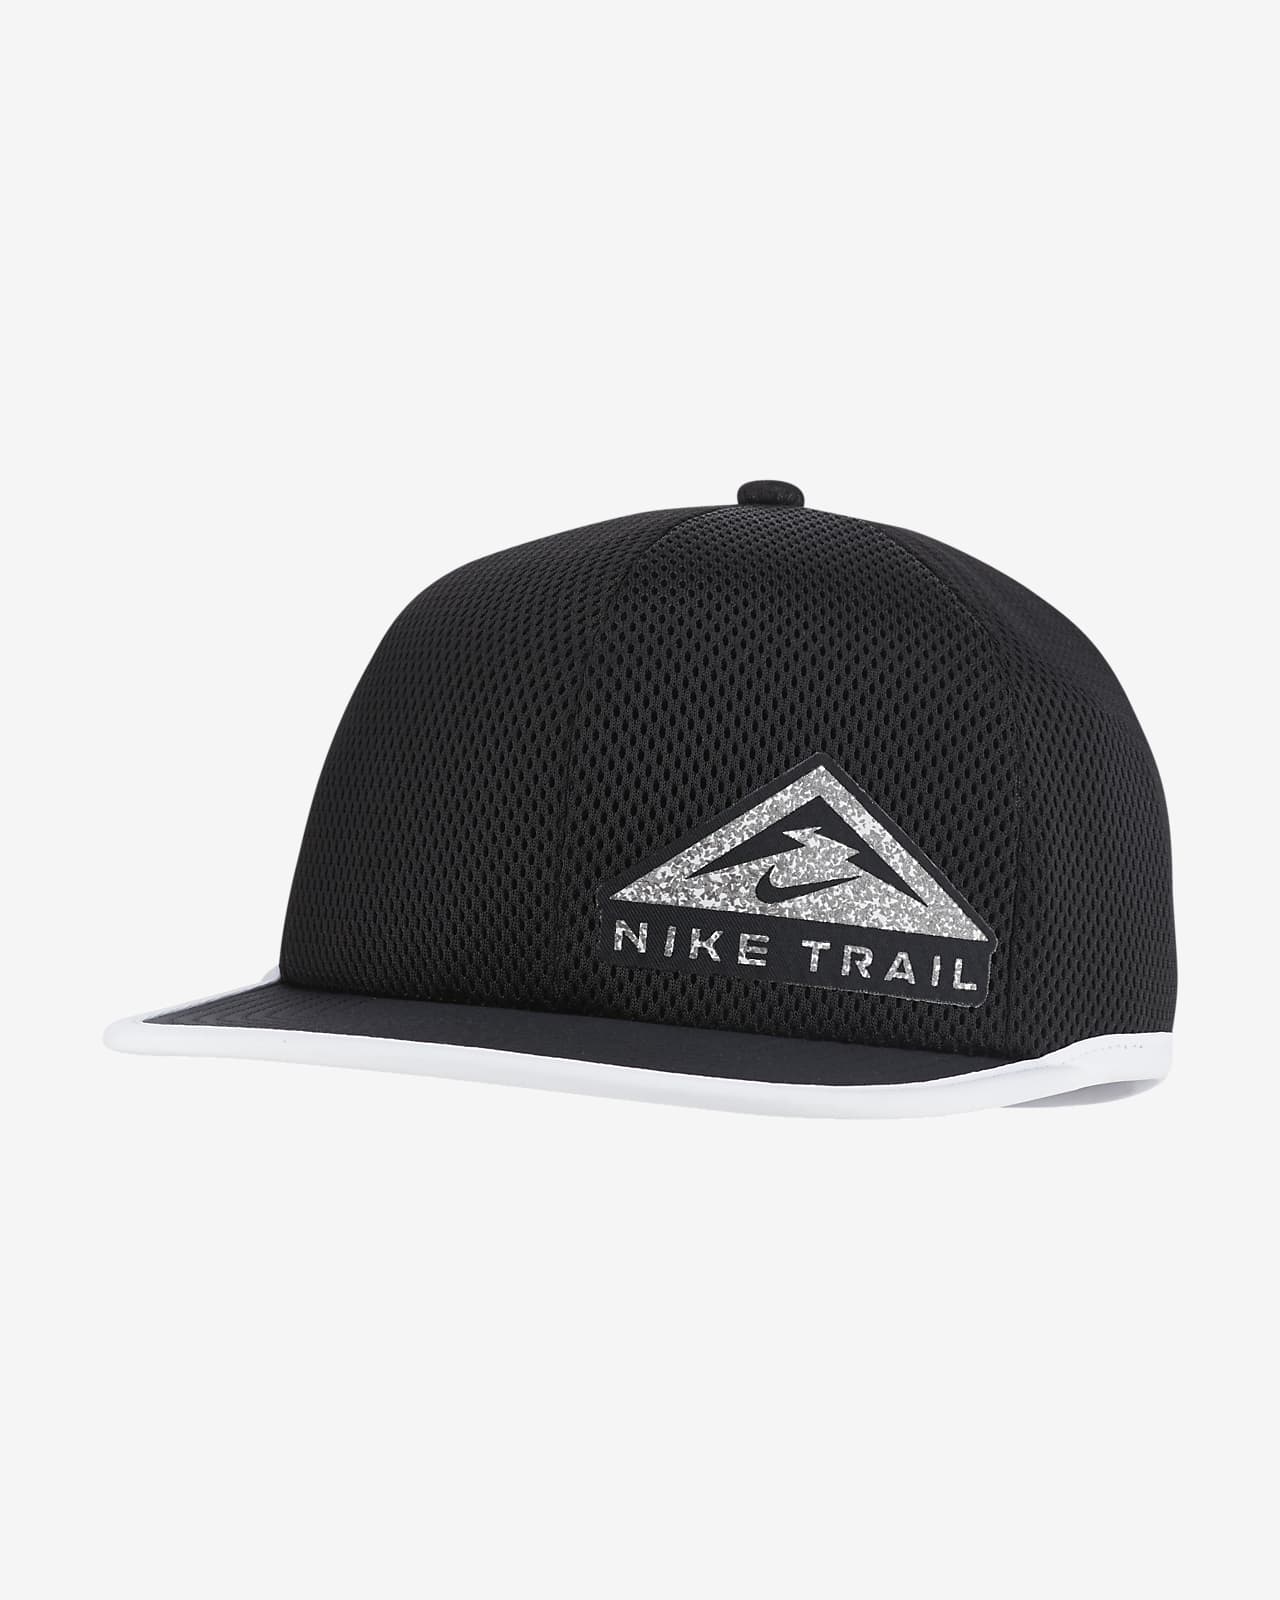 Nike Dri-FIT Pro Pet voor trailrunning